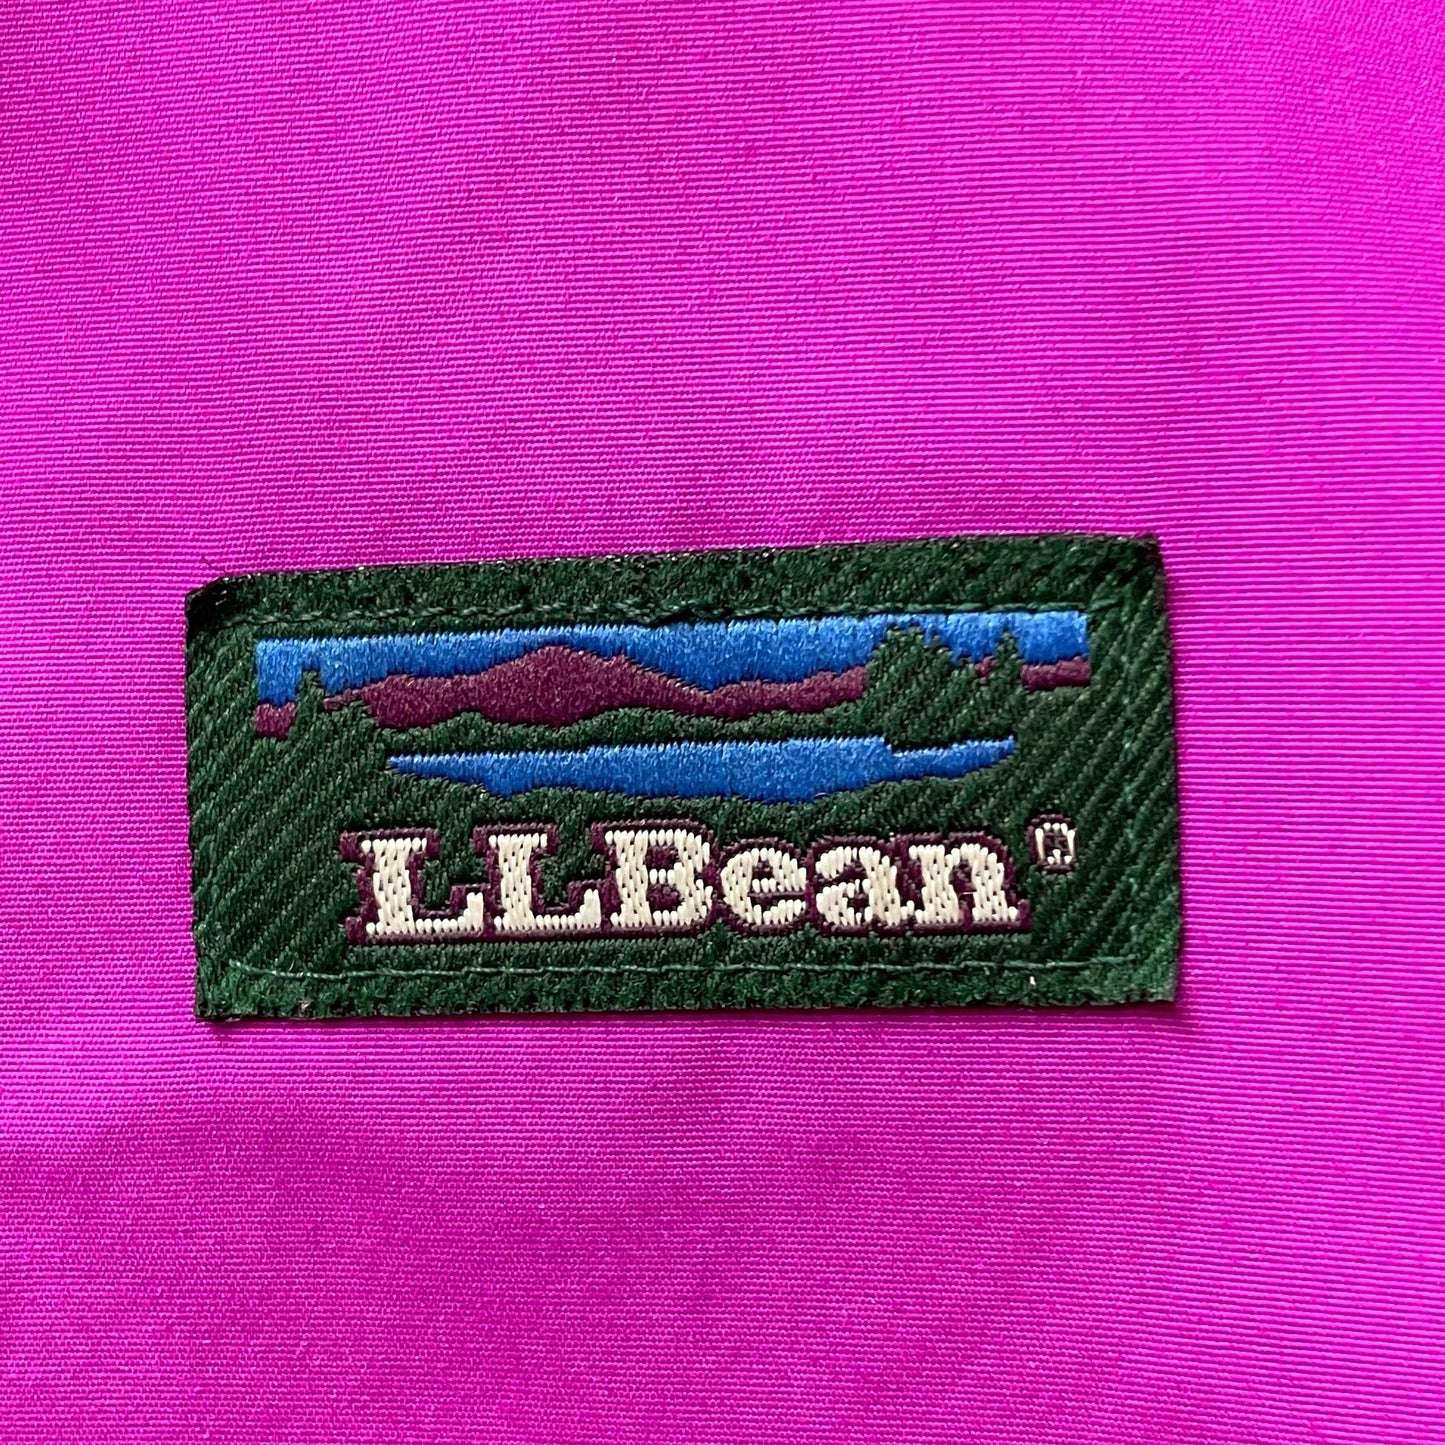 LLBean jacket